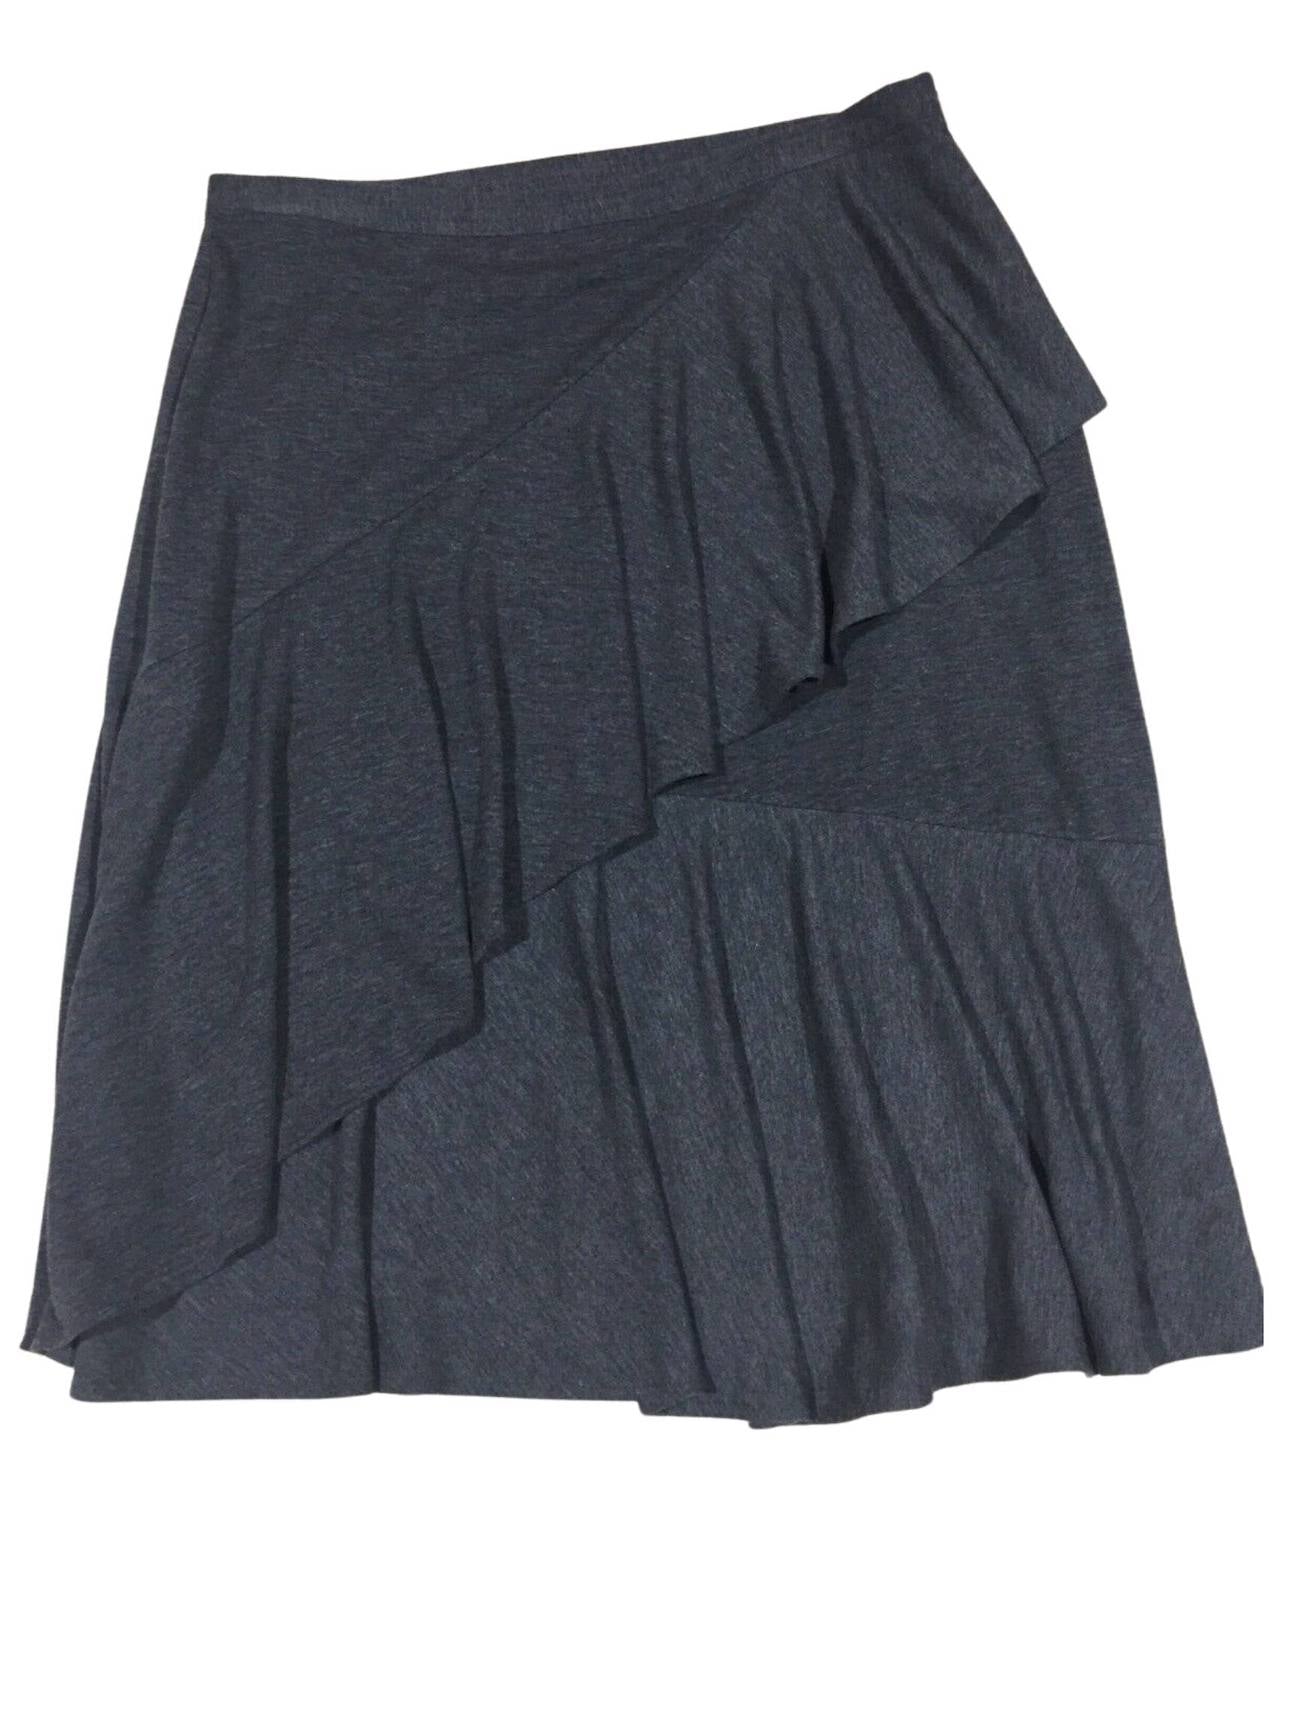 Dark Winter SUNDANCE gray knit ruffle skirt